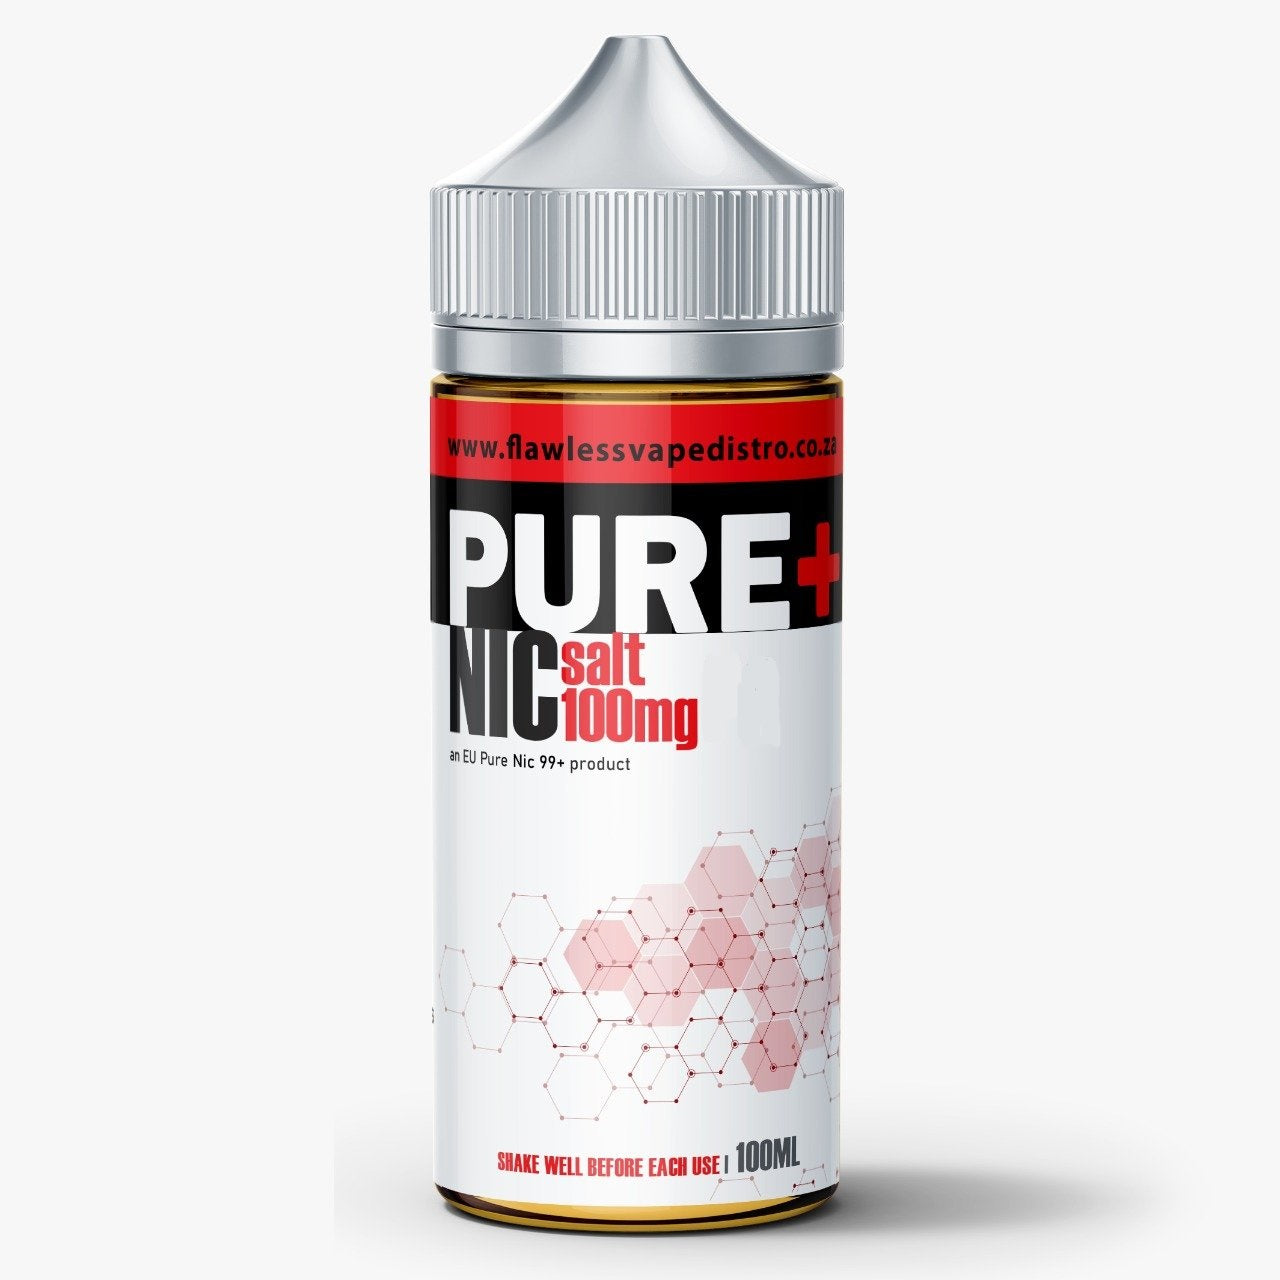 Pure+ 100mg Salt Nicotine 100ml